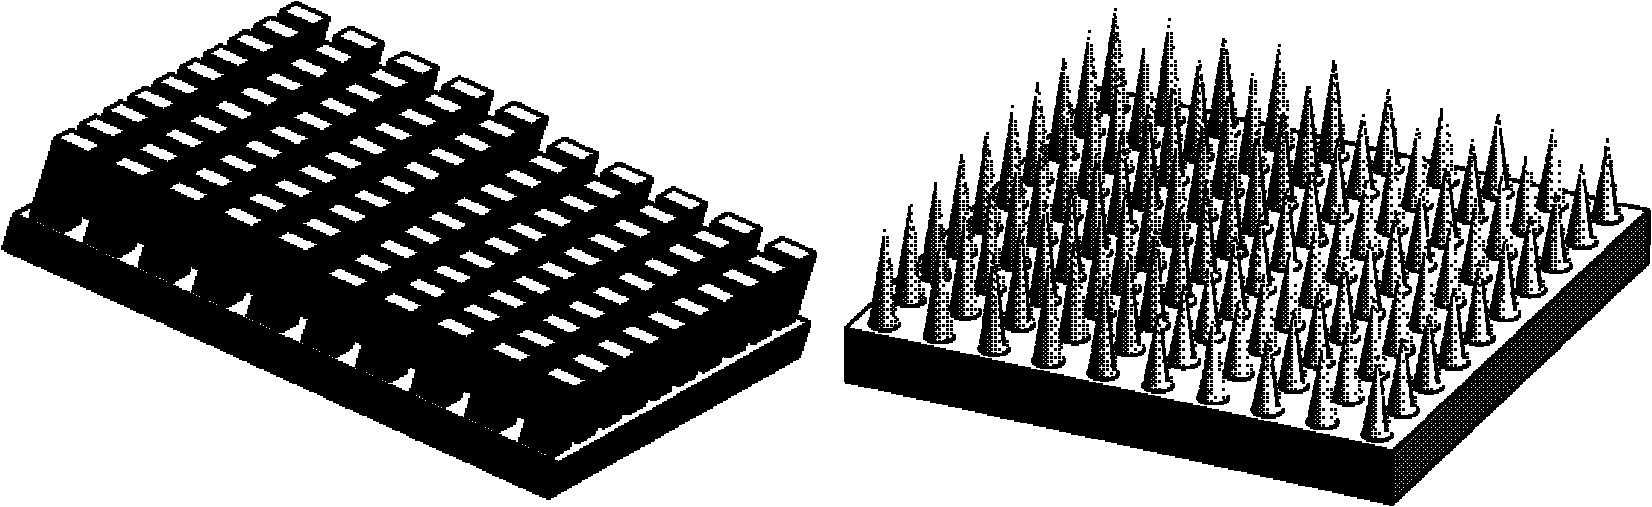 Method for preparing step micro-needle array